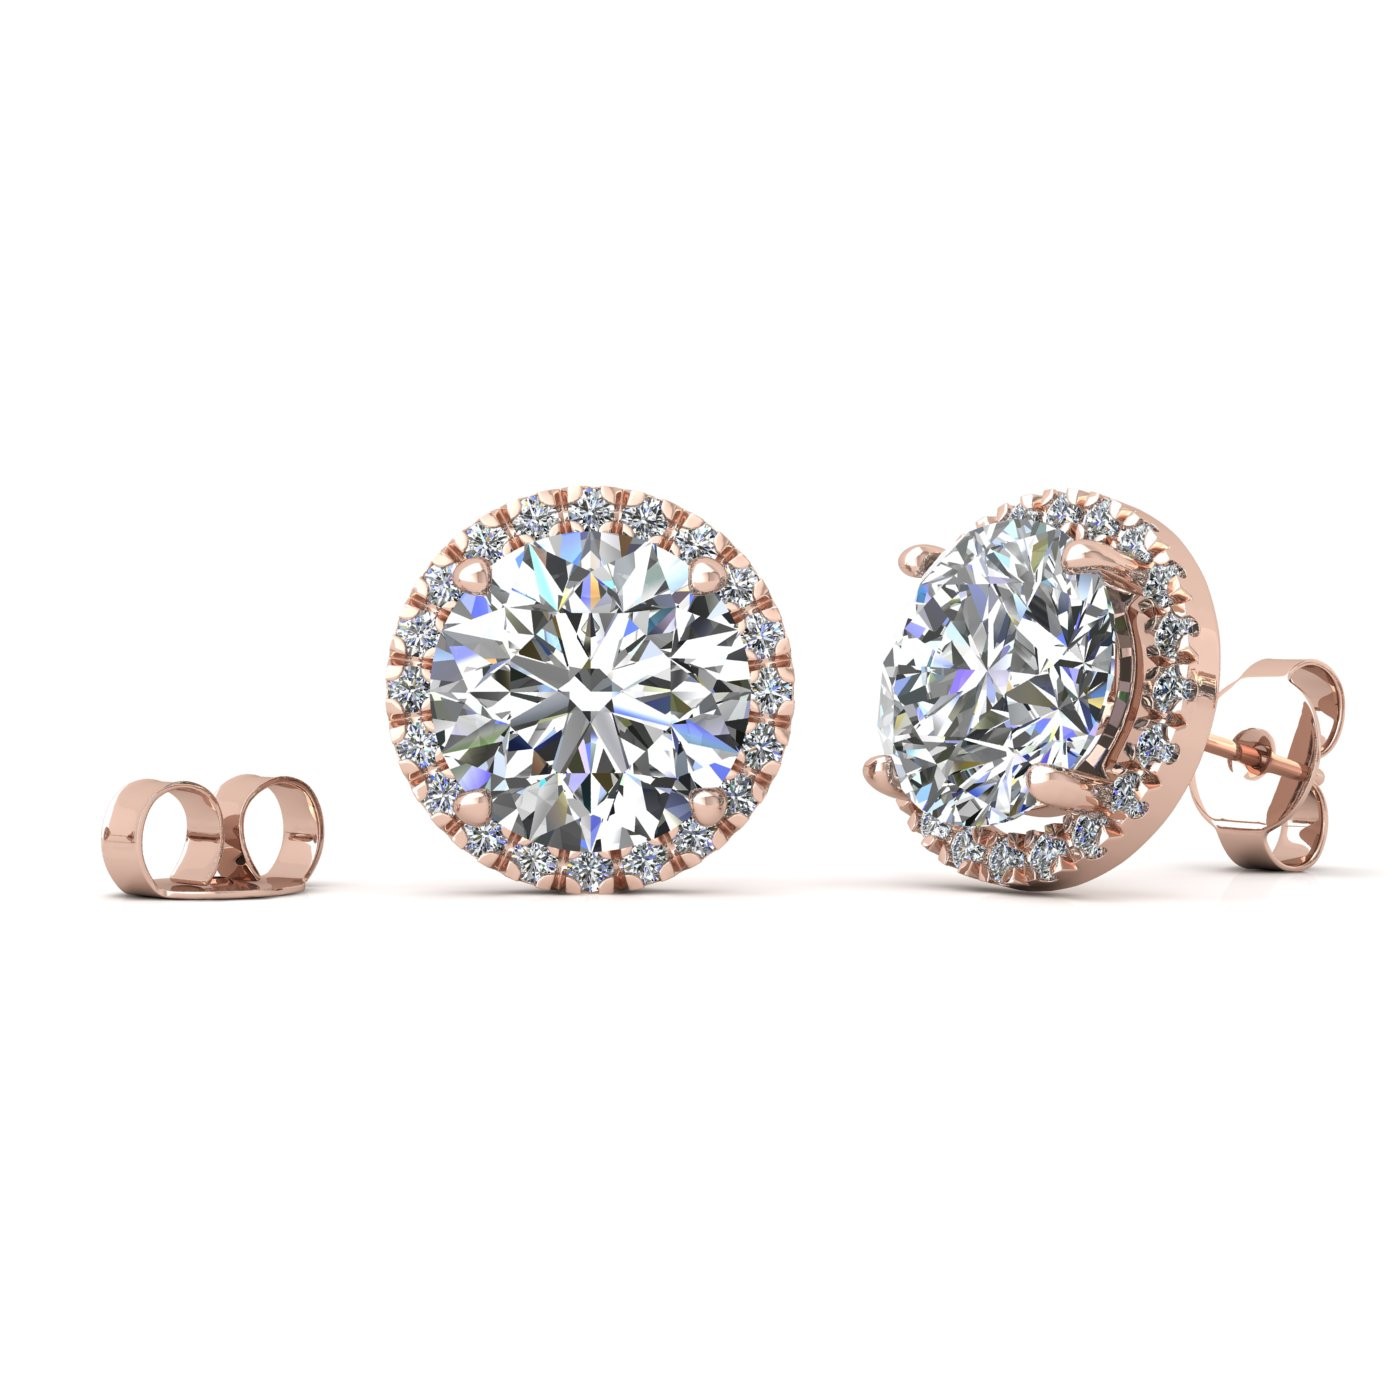 18k white gold  1,5 ct each (3,0 tcw) 4 prongs round shape diamond earrings with diamond pavÉ set halo Photos & images